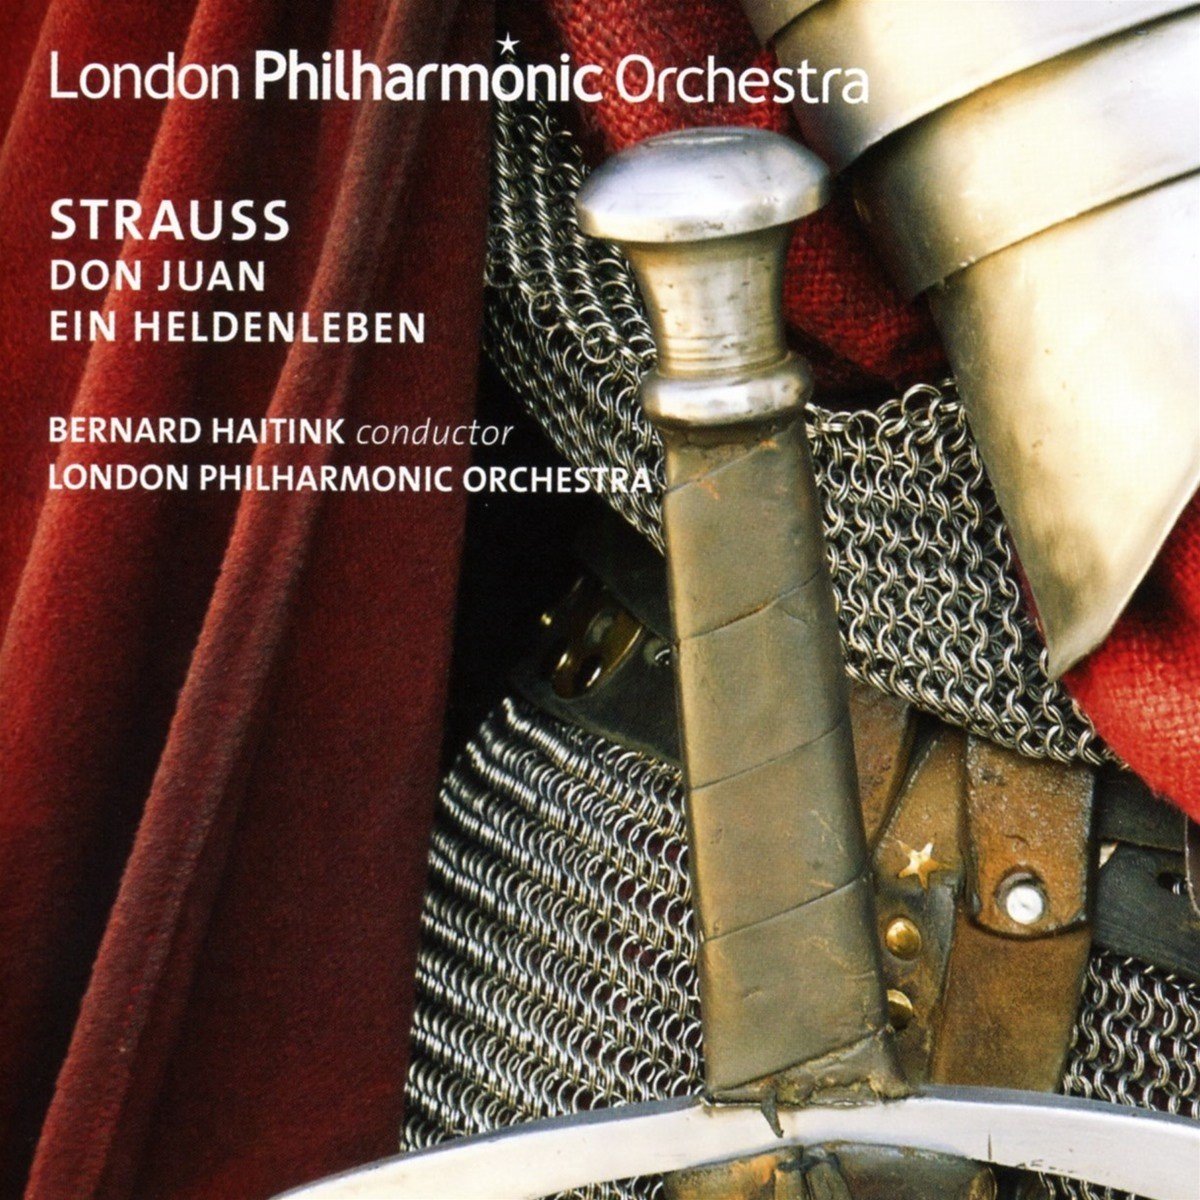 Strauss: Don Juan | London Philharmonic Orchestra, Richard Strauss, Bernard Haitink